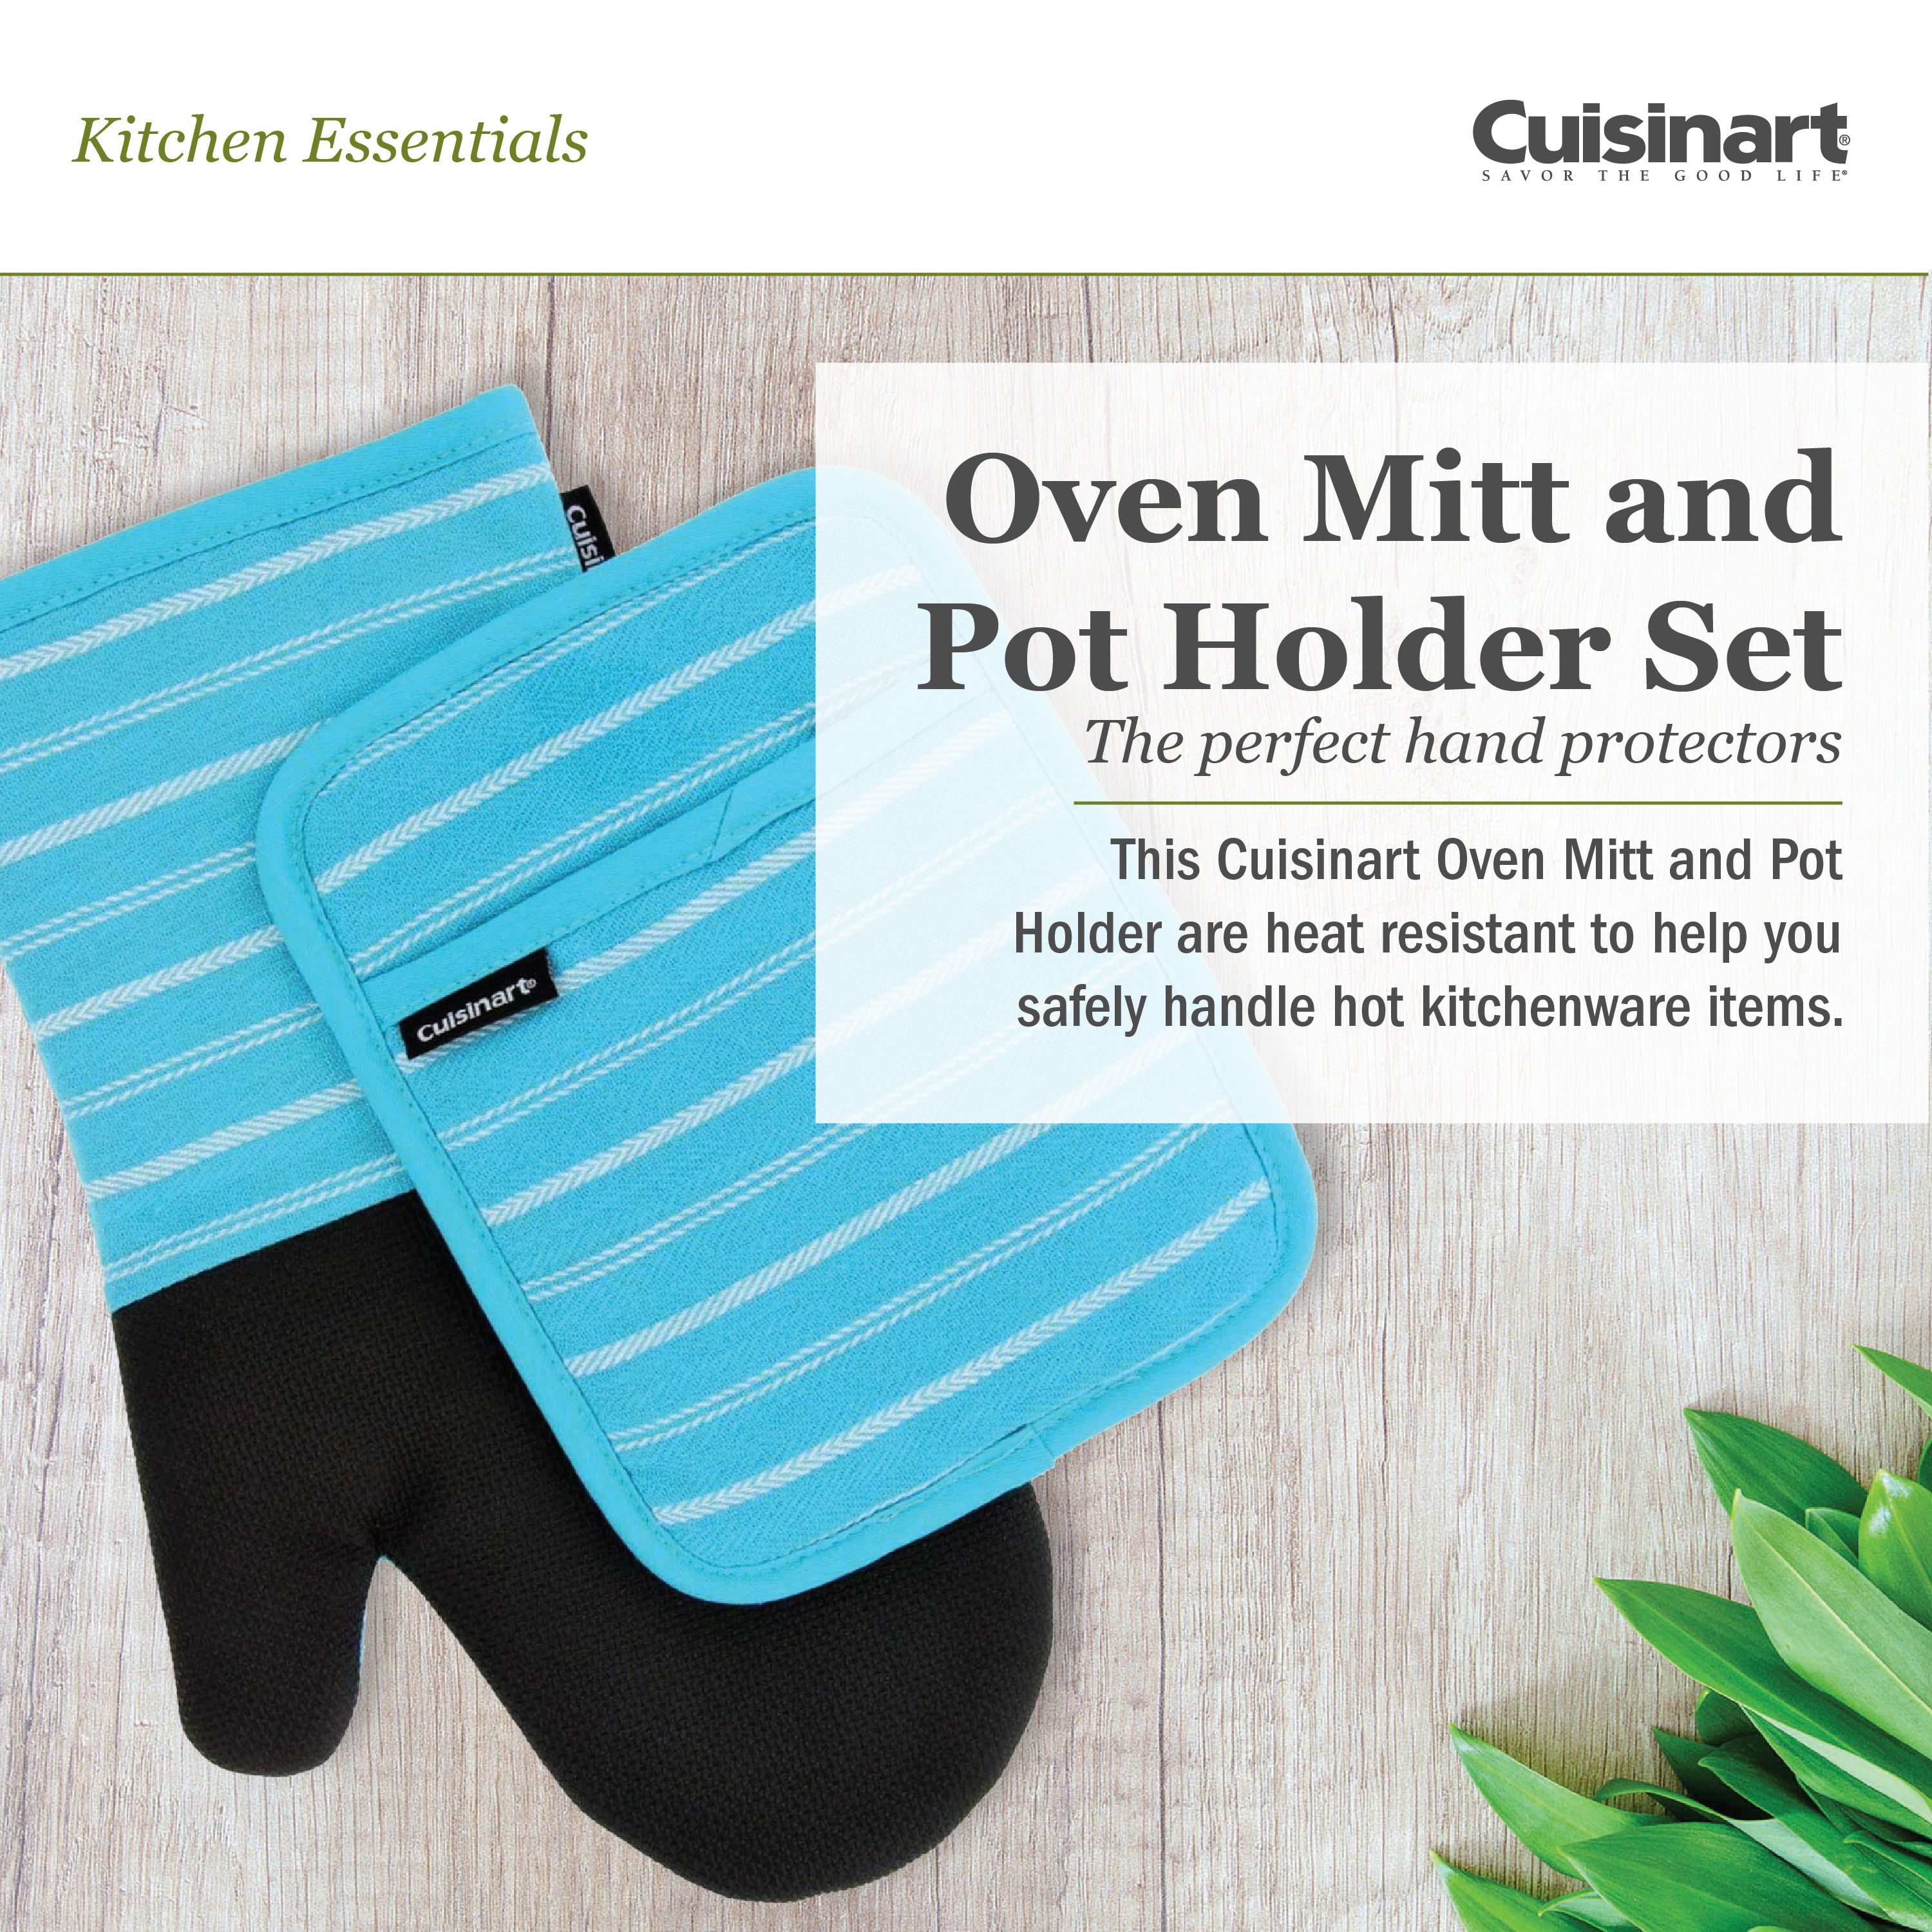 The Big One® Solid Pot Holder & Oven Mitt Set